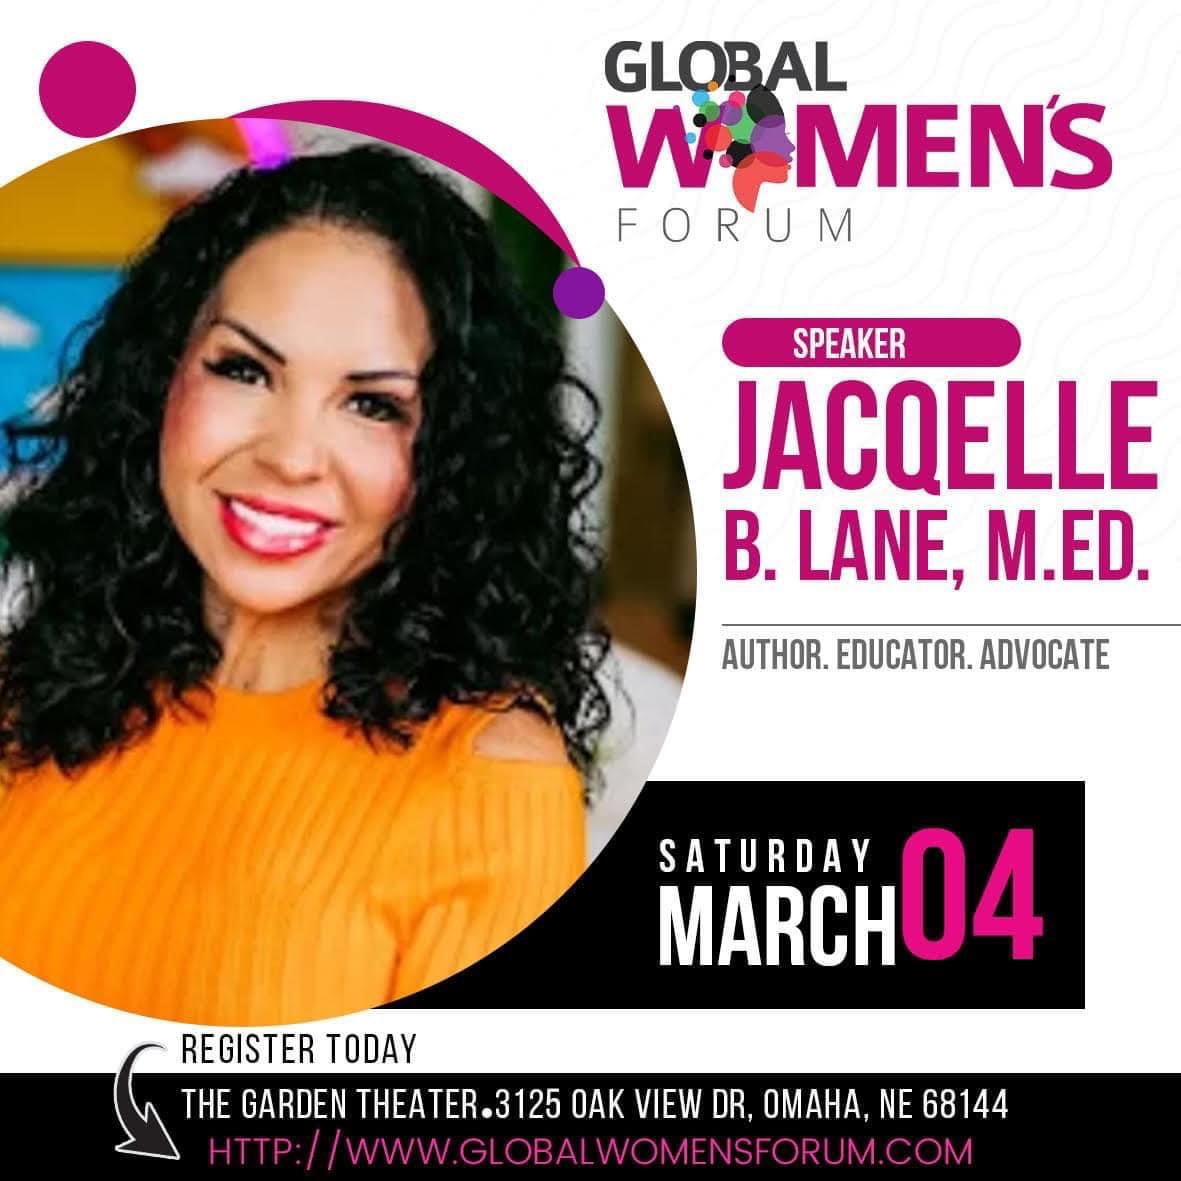 Global Women's Forum featuring speaker Jacqelle B. Lane, M.ED - jacqelle lane